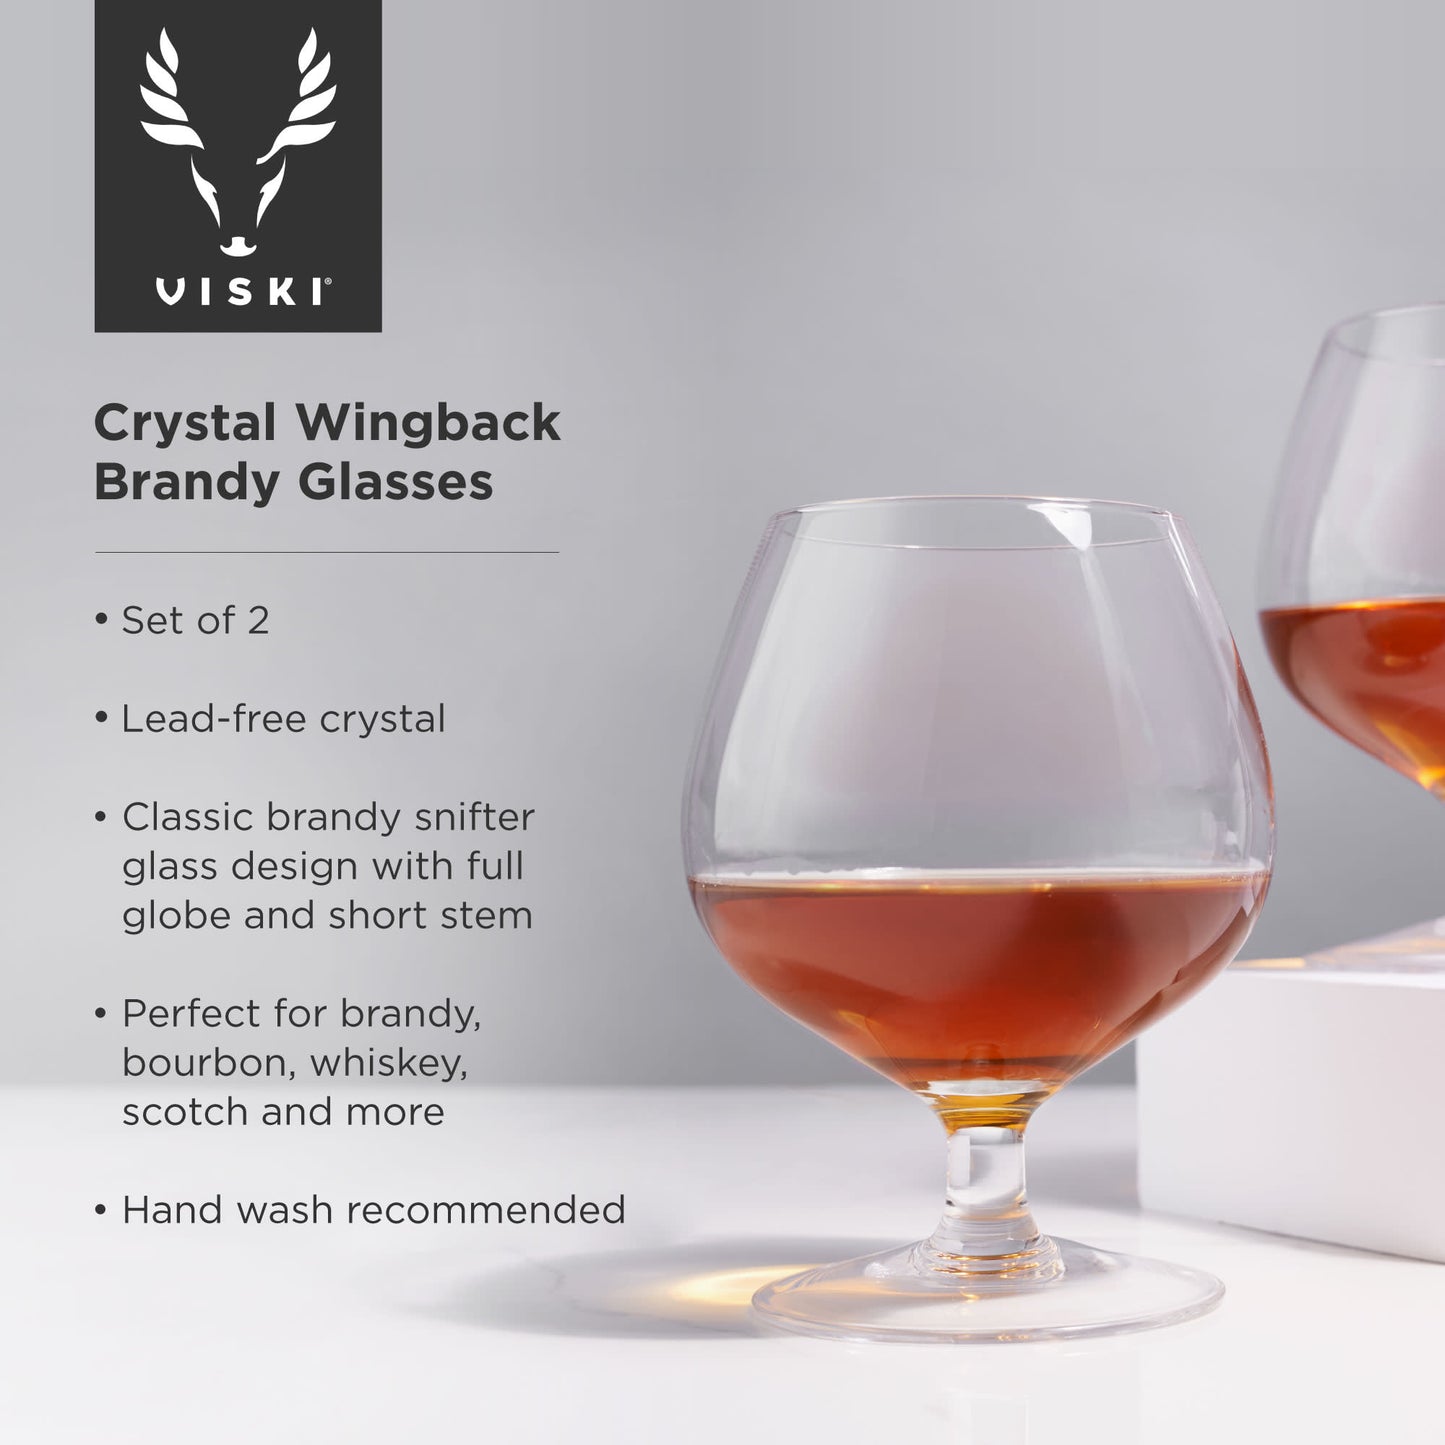 Crystal Wingback Brandy Glasses